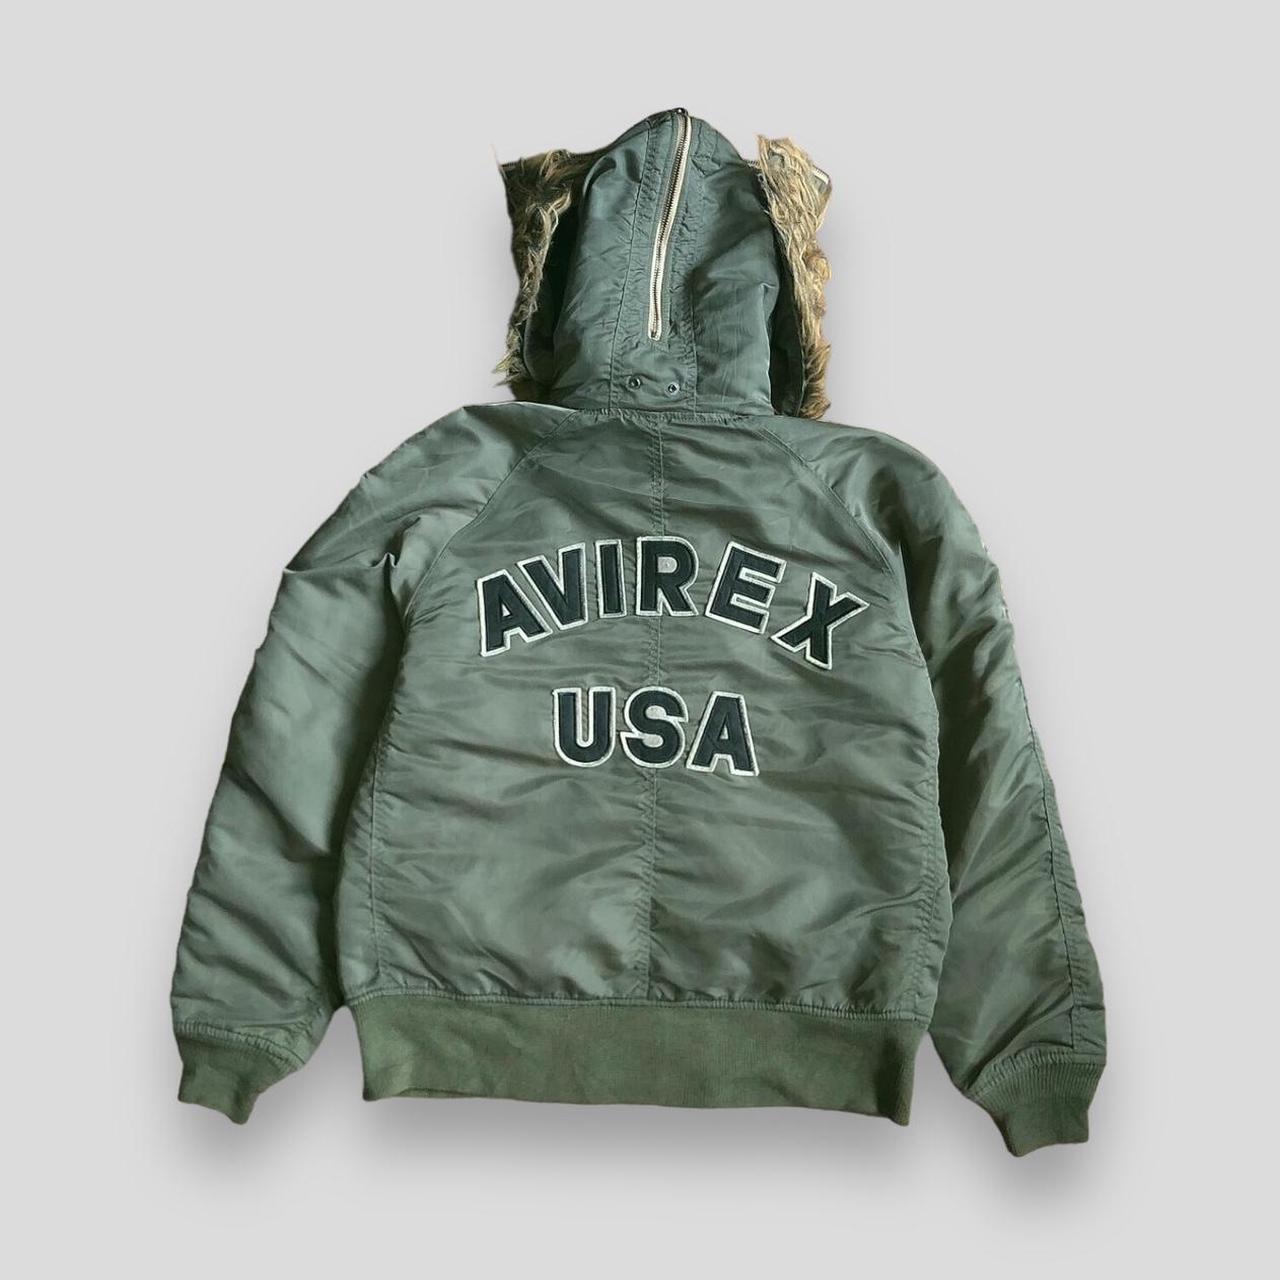 Vintage Avirex jacket with fur hood. Green flight